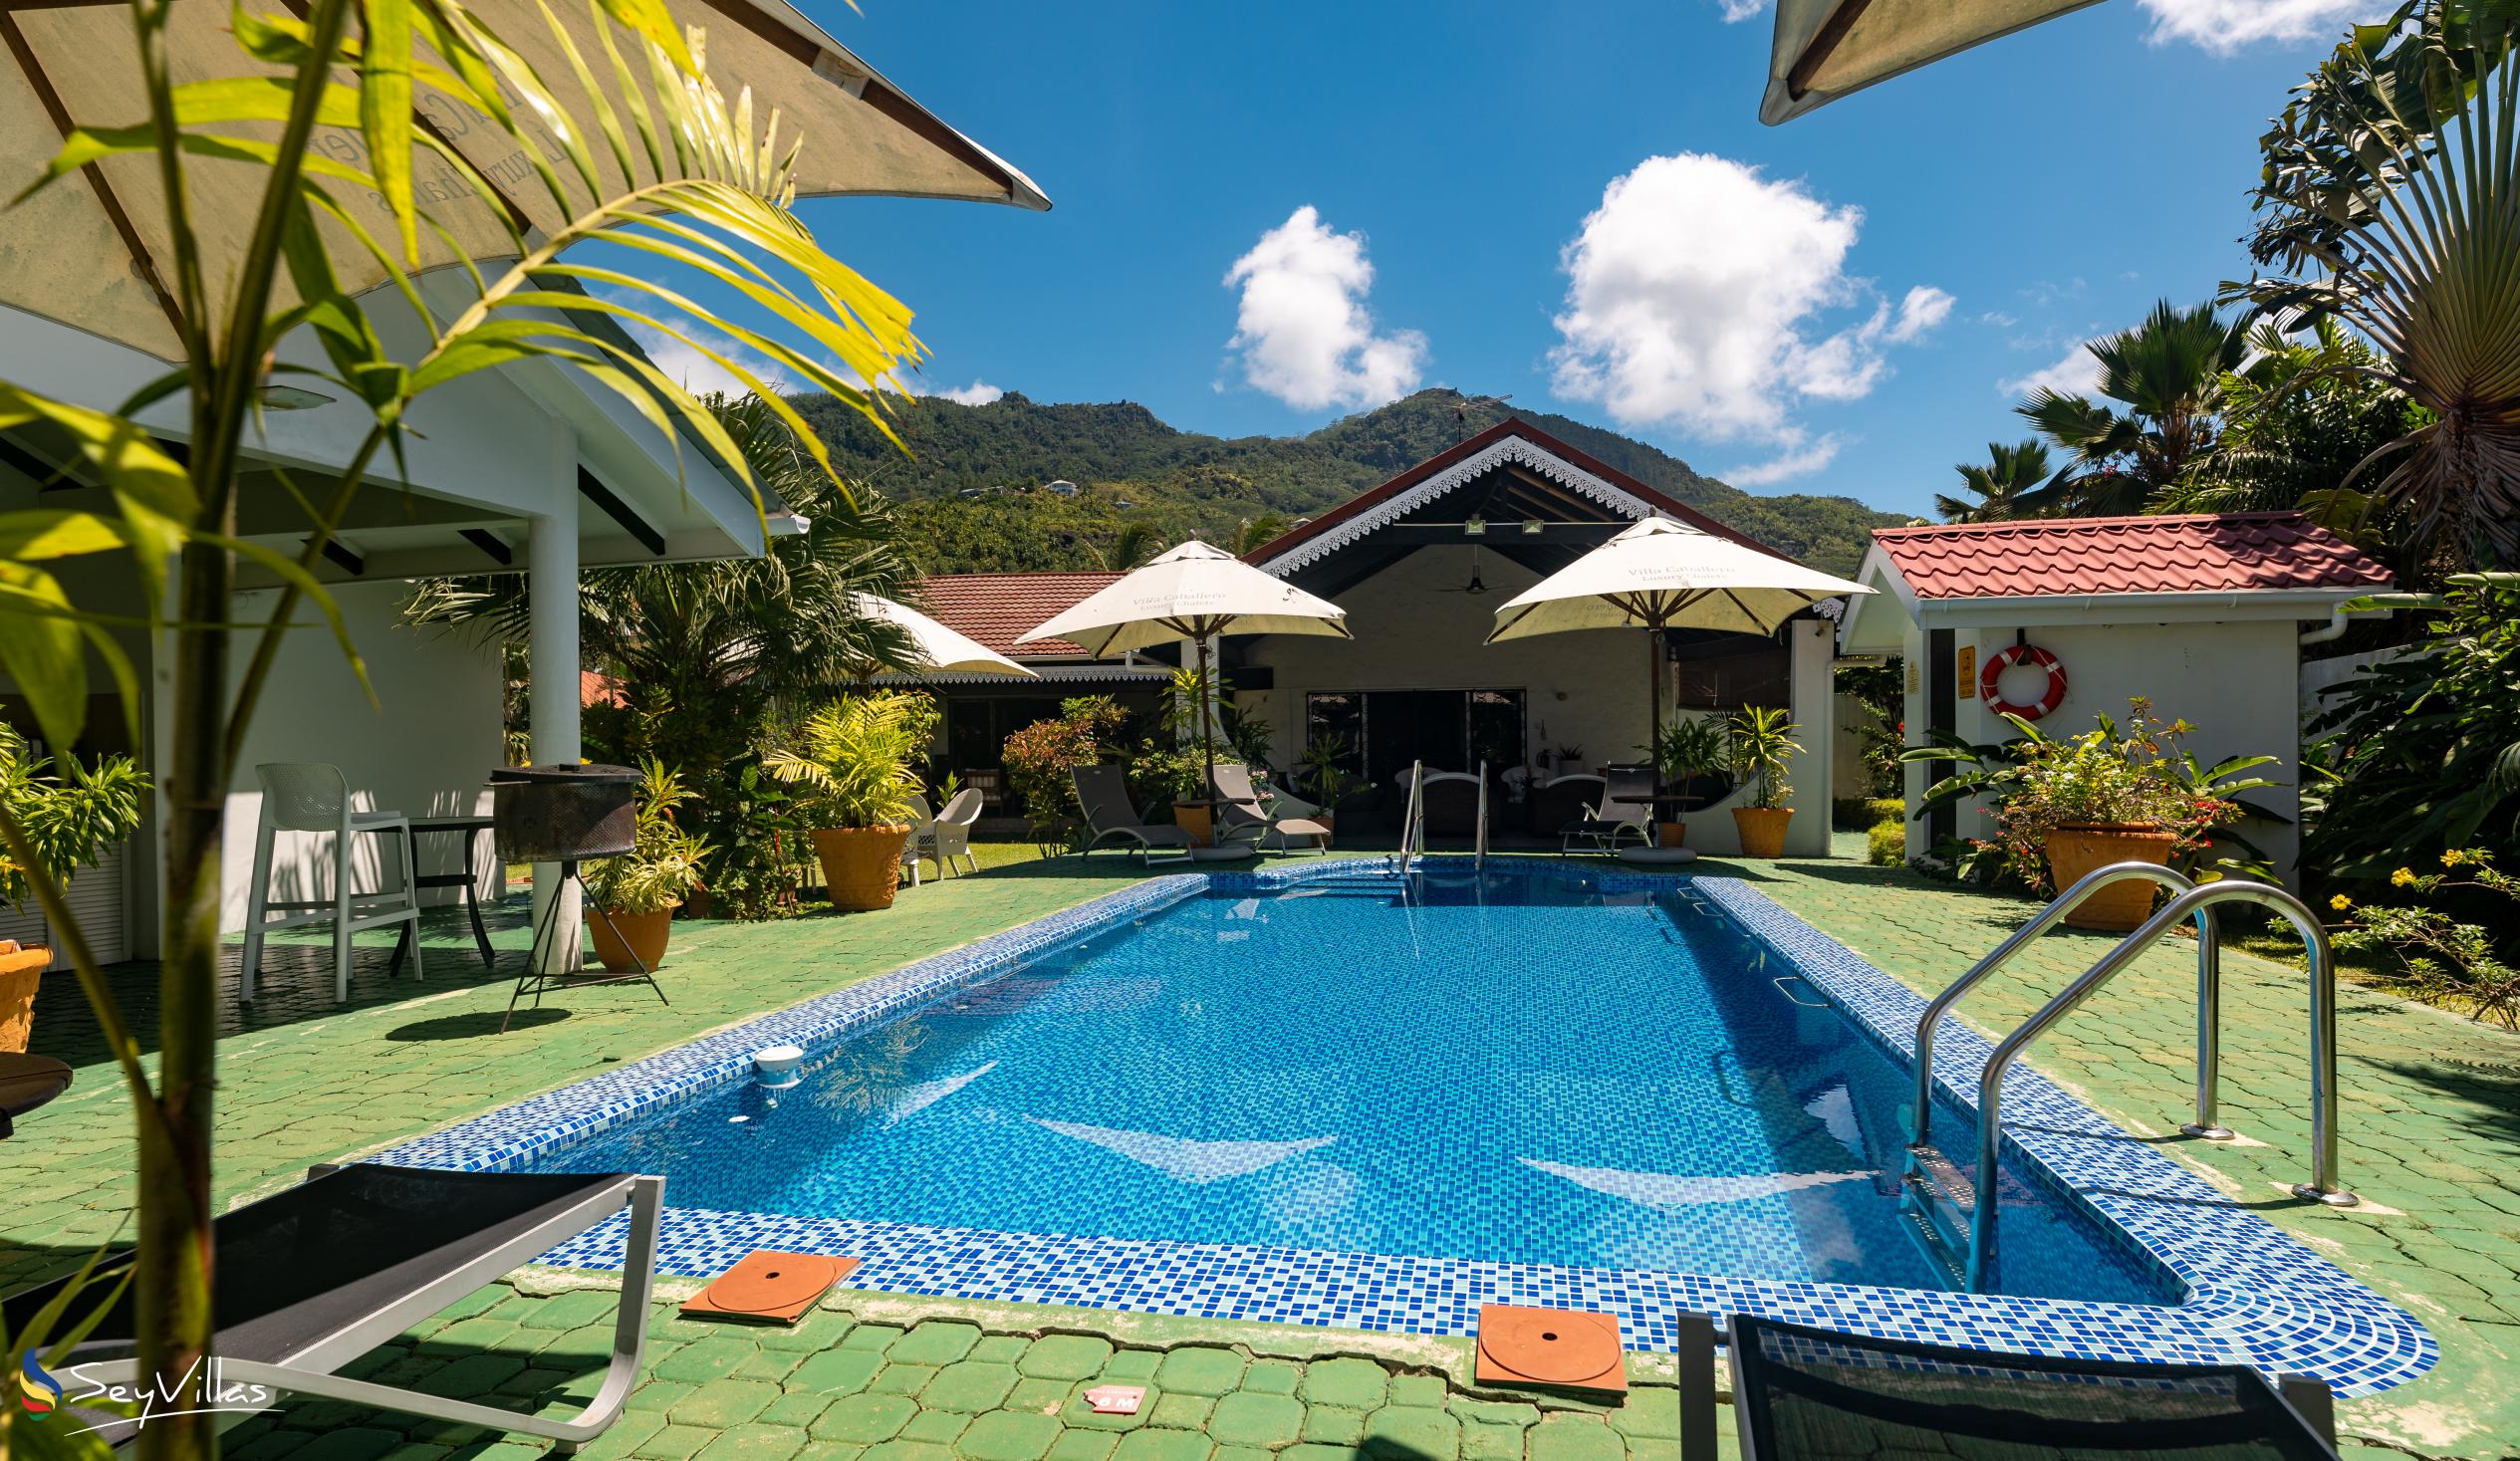 Photo 2: Villa Caballero - Outdoor area - Mahé (Seychelles)